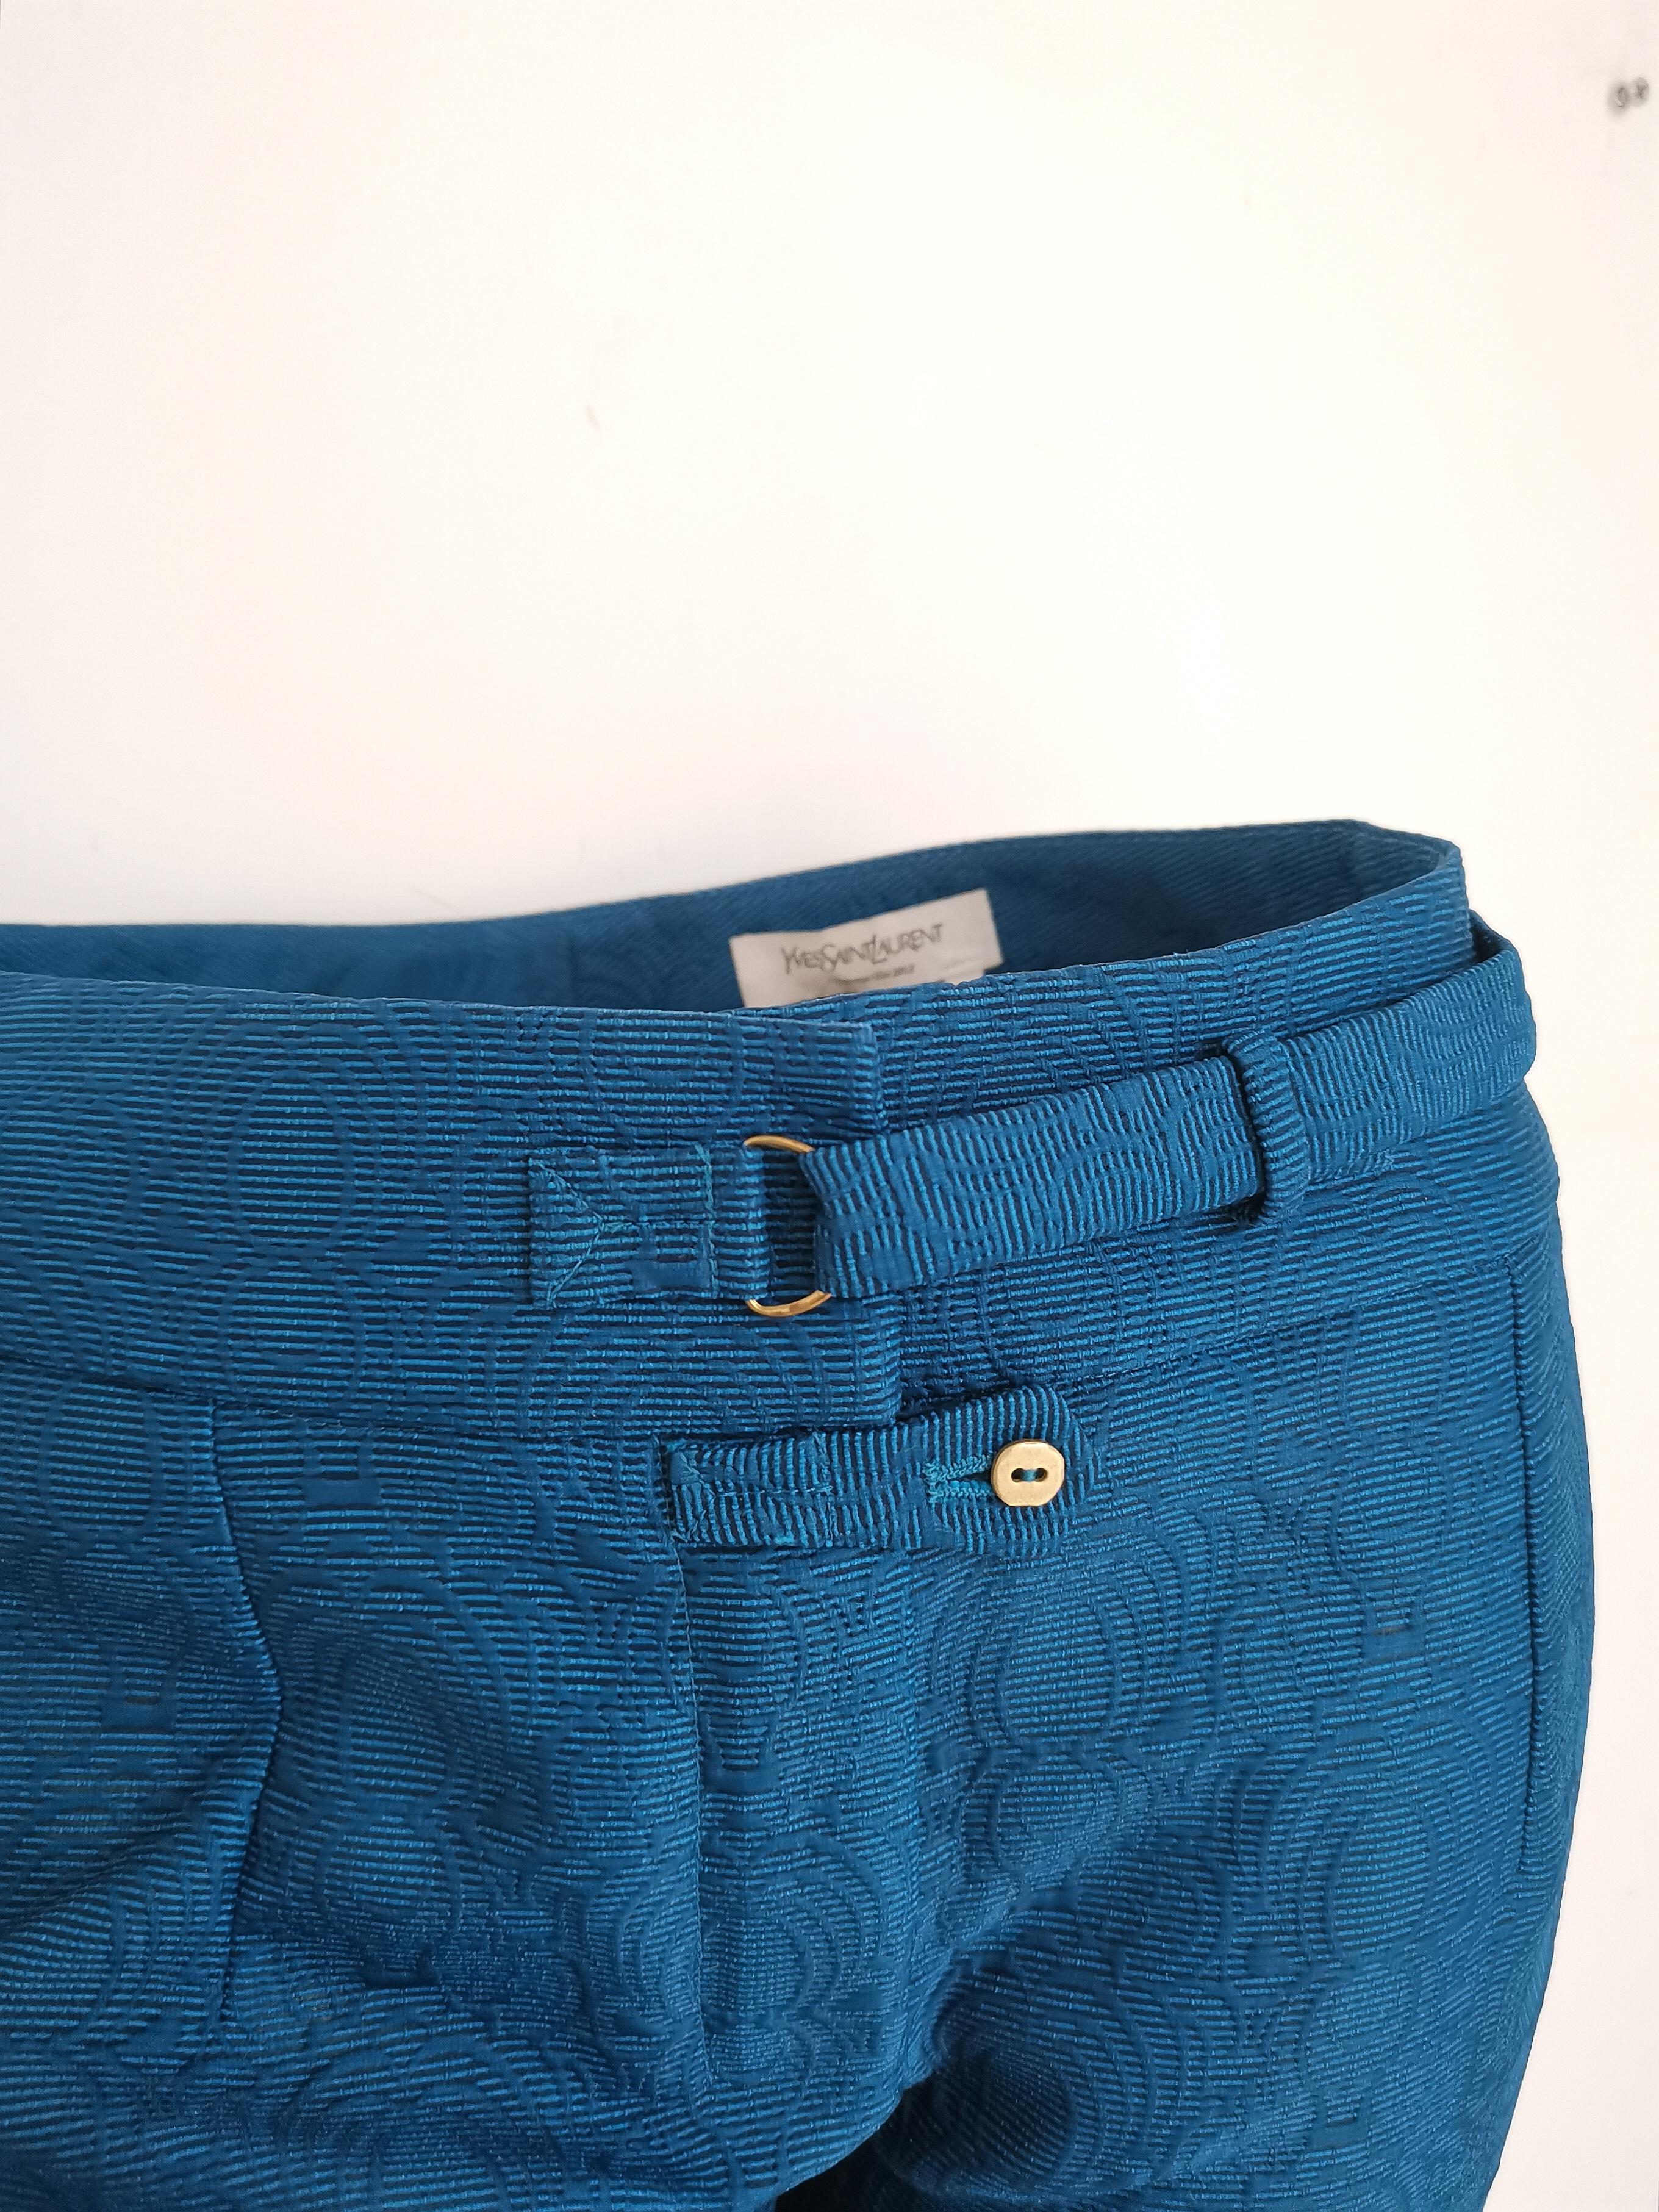 2012 Yves Saint Laurent blu pants NWOT For Sale 5